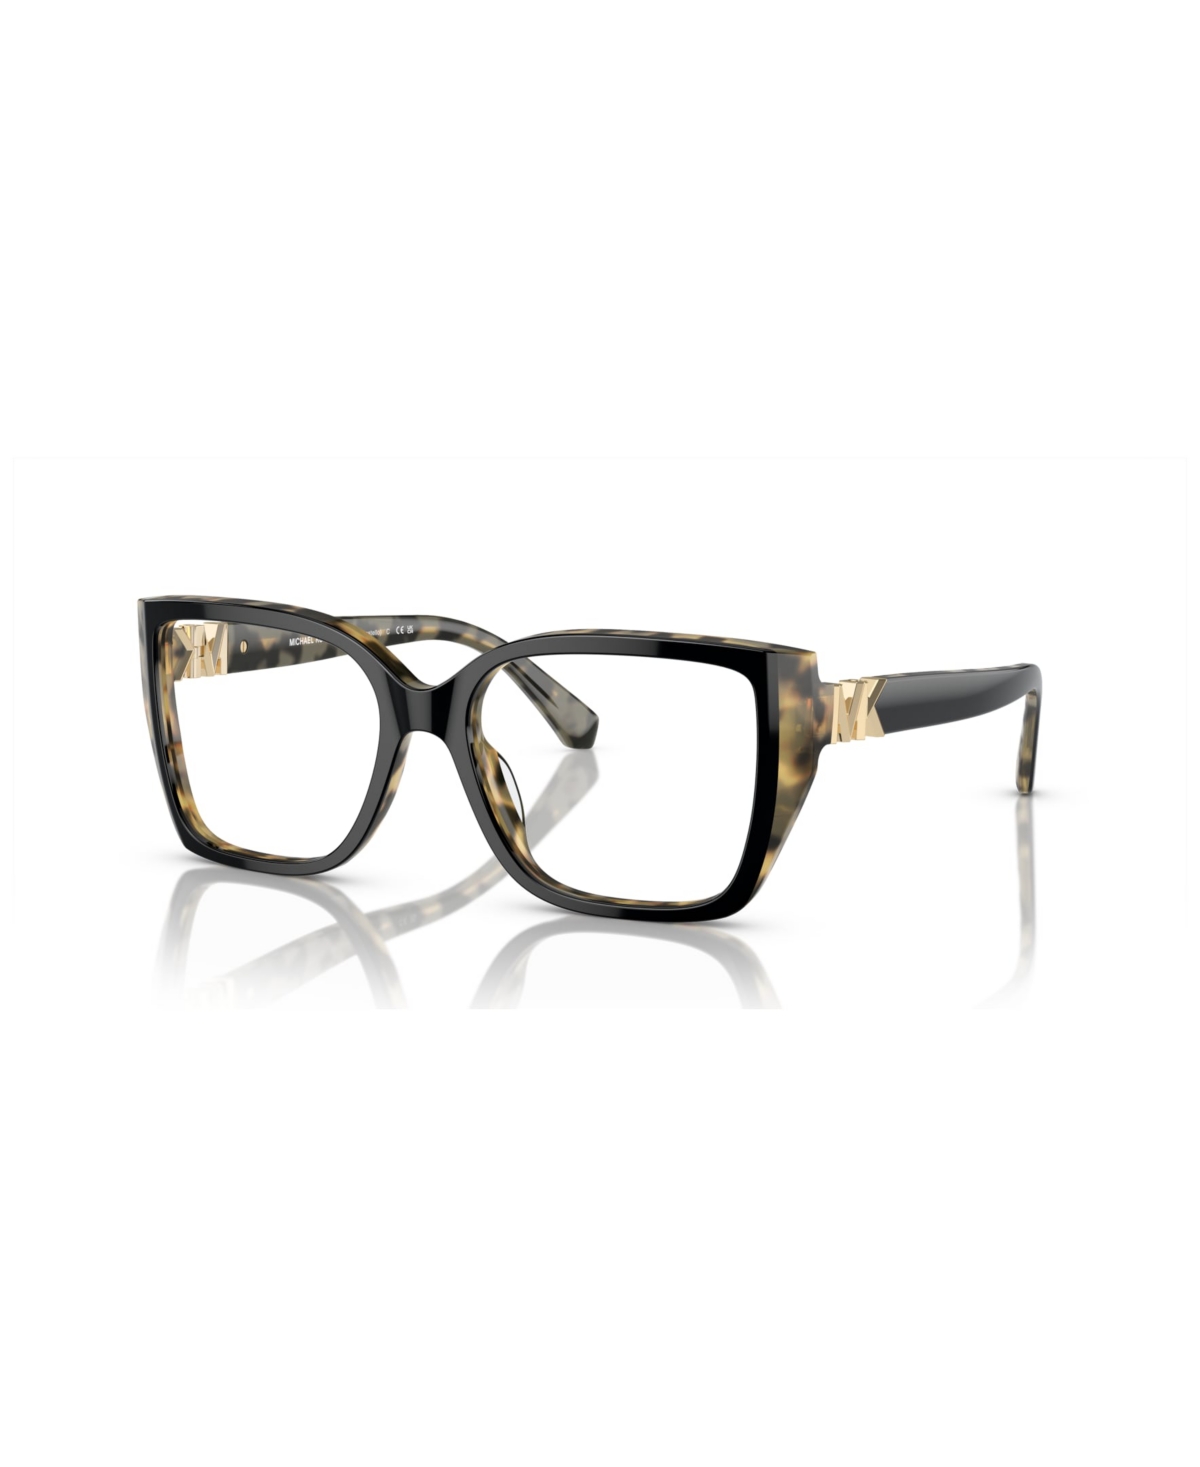 Women's Castello Eyeglasses, MK4115U - Black, Amber Tortoise